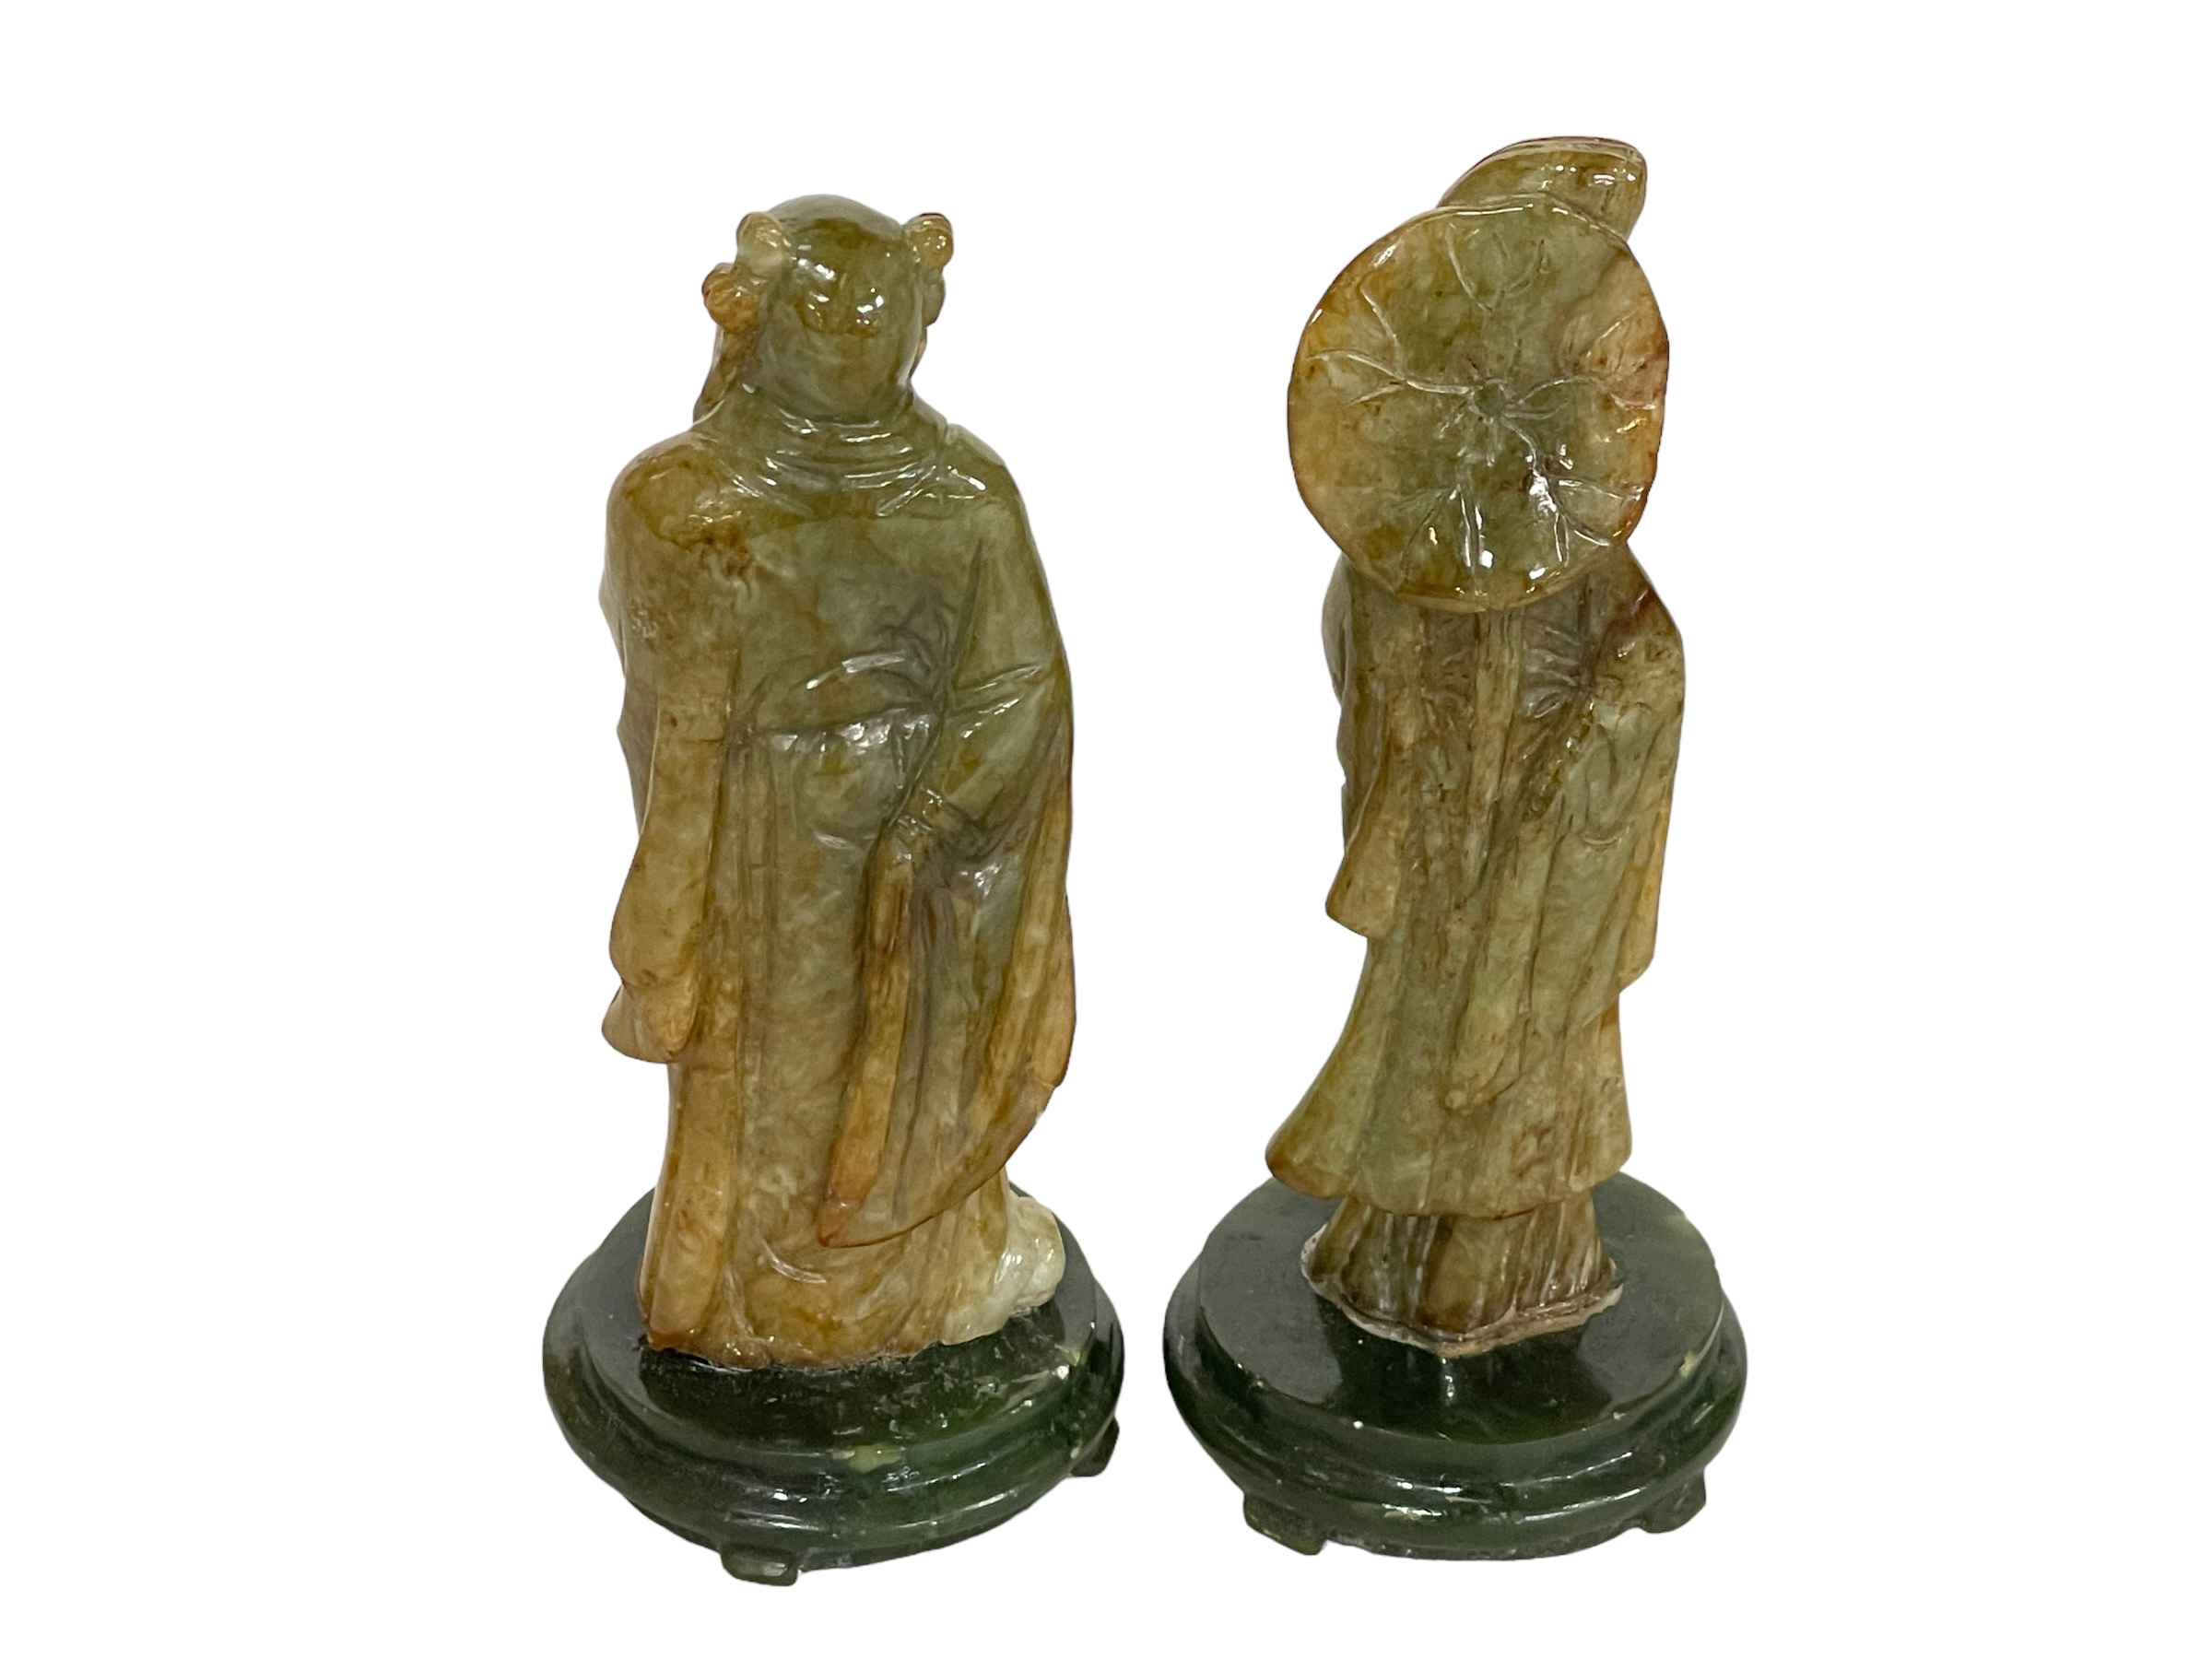 Pair of carved Jade figures, 10cm. - Image 2 of 2